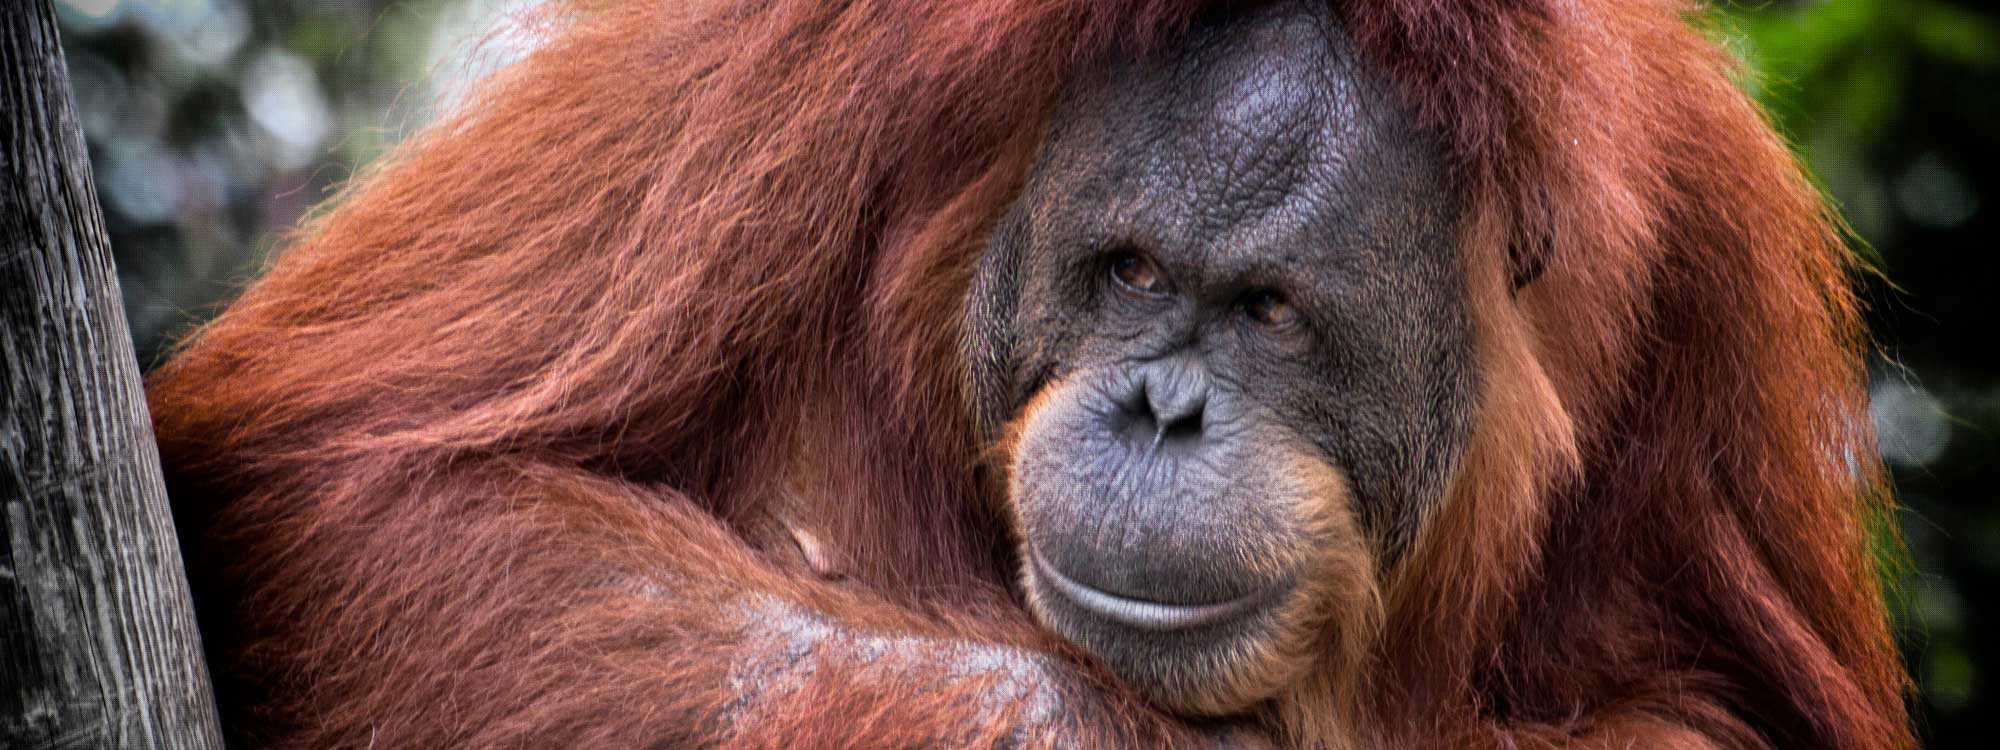 Palm Oil is destroying the Orangutan habitat